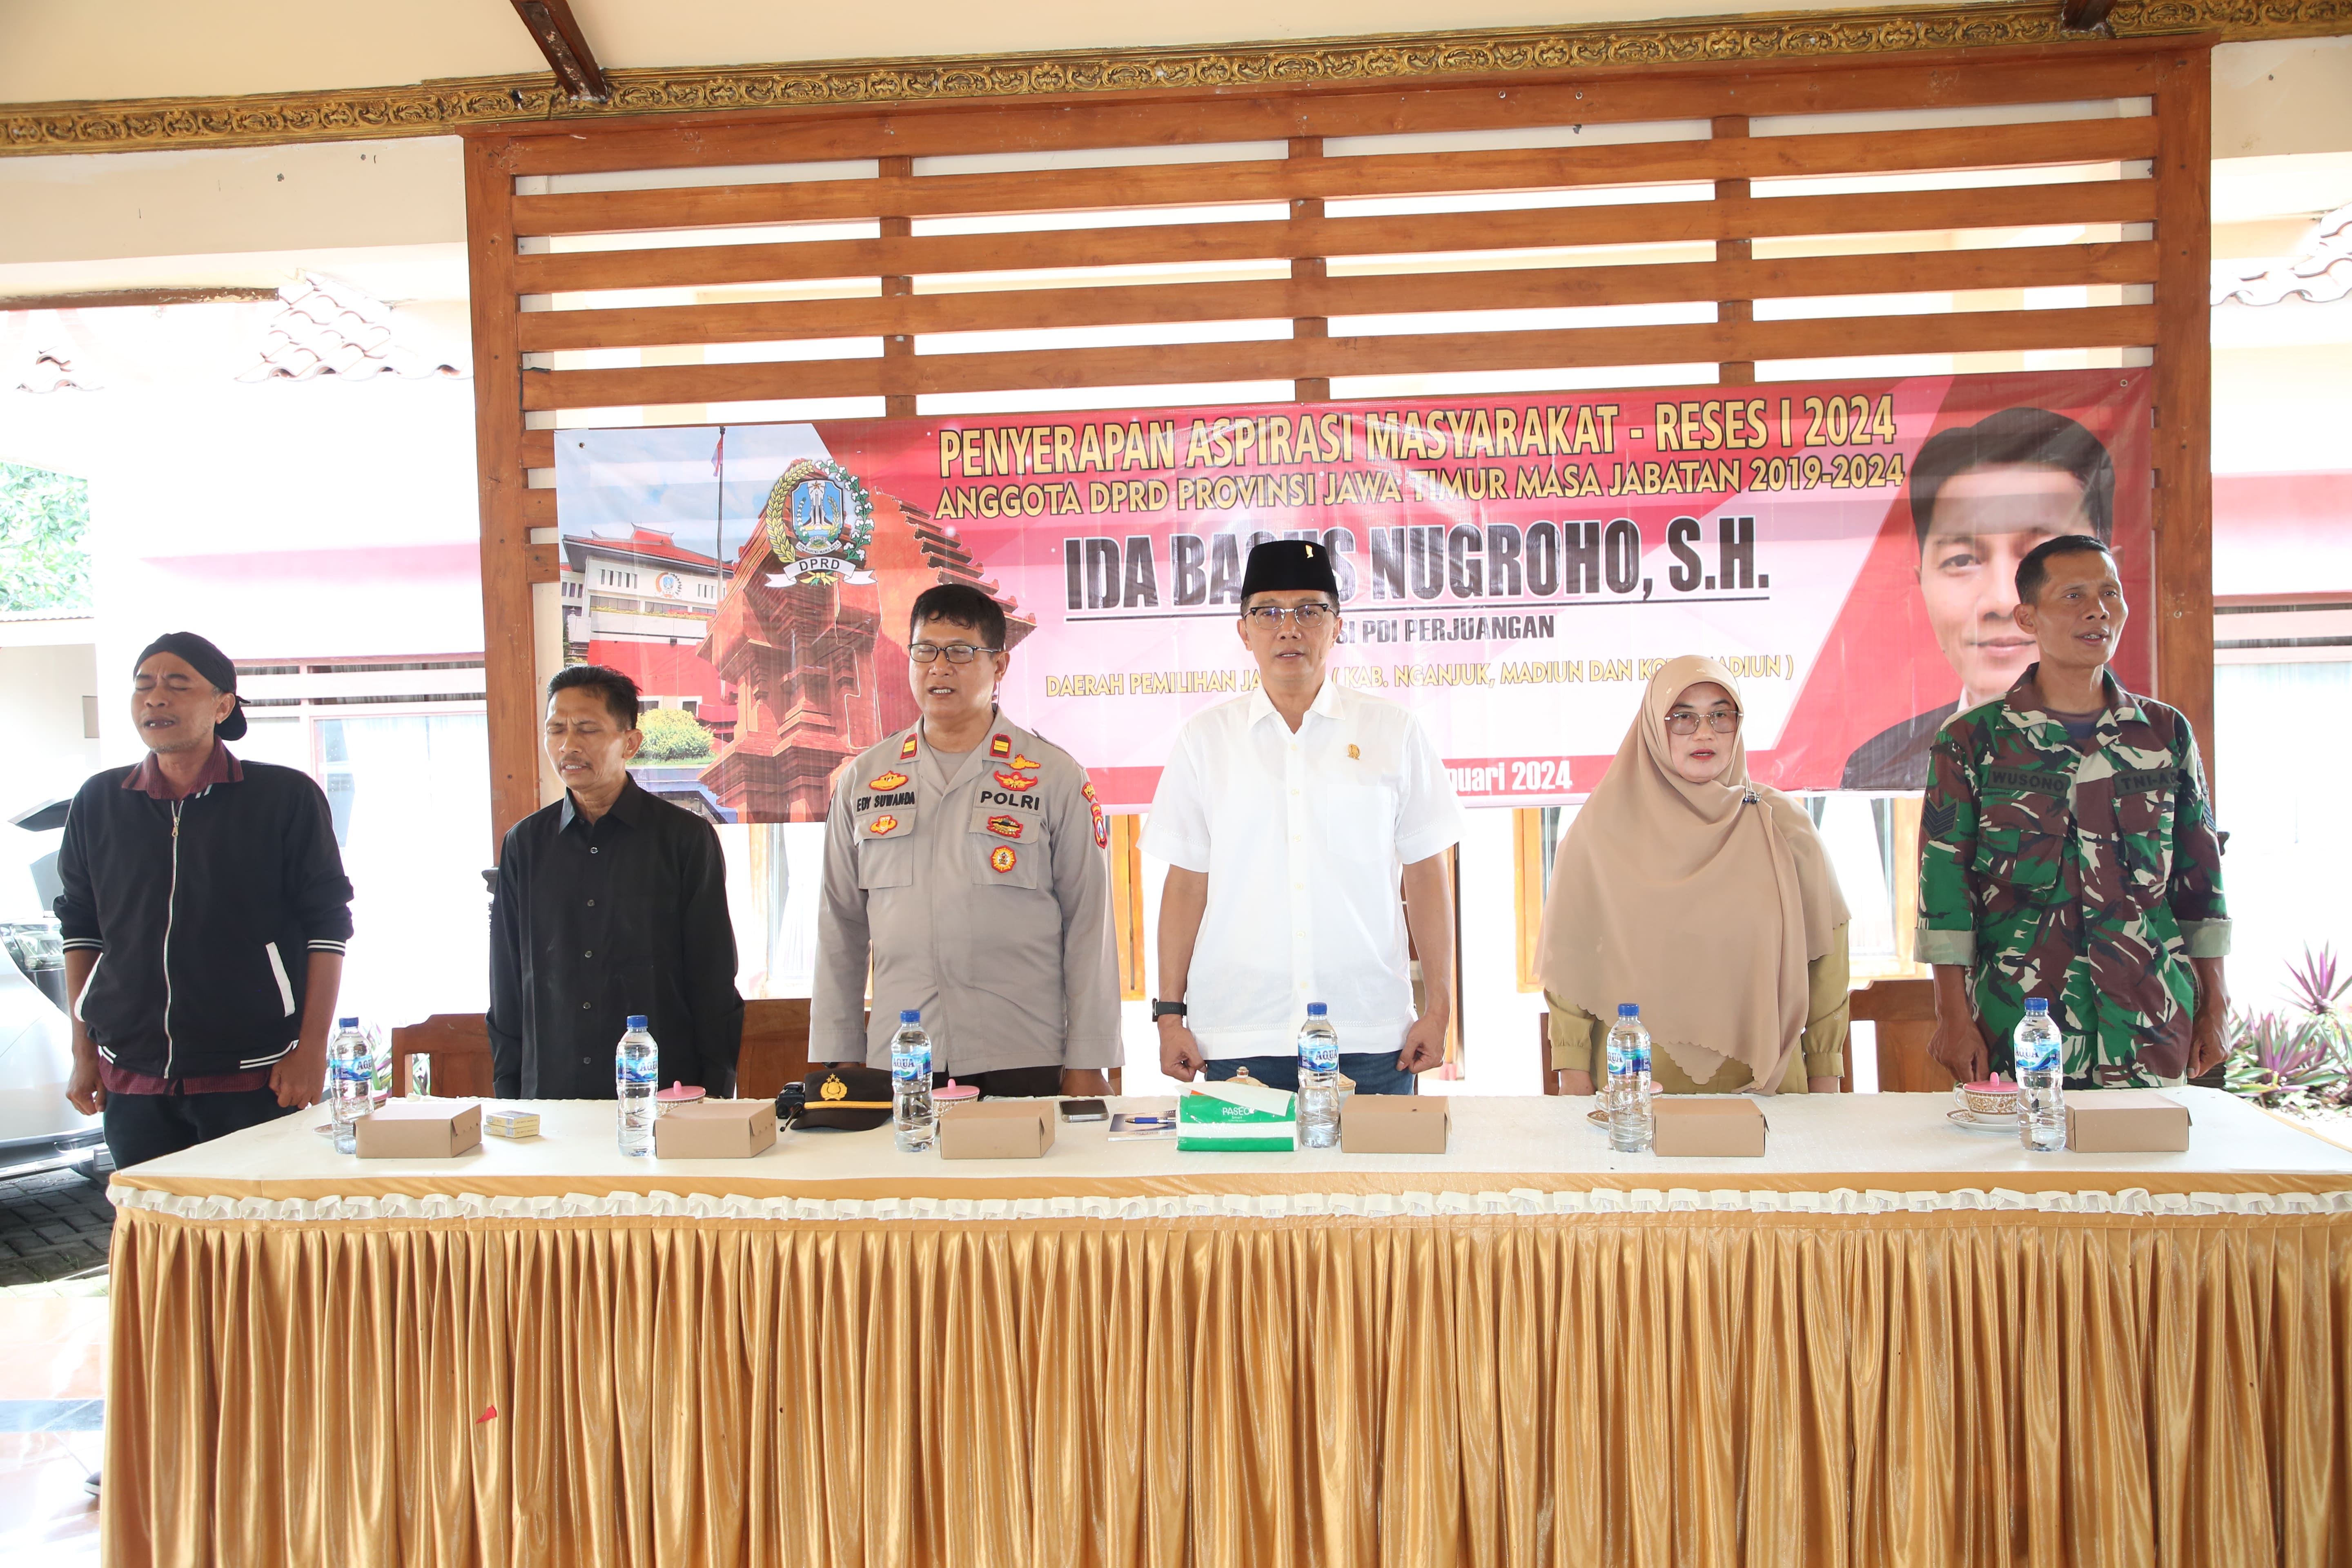 Anggota Komisi E DPRD Provinsi Jawa Timur Ida Bagus Nugroho memulai Reses I Tahun 2024 DPRD Provinsi Jawa Timur di Kabupaten Nganjuk.